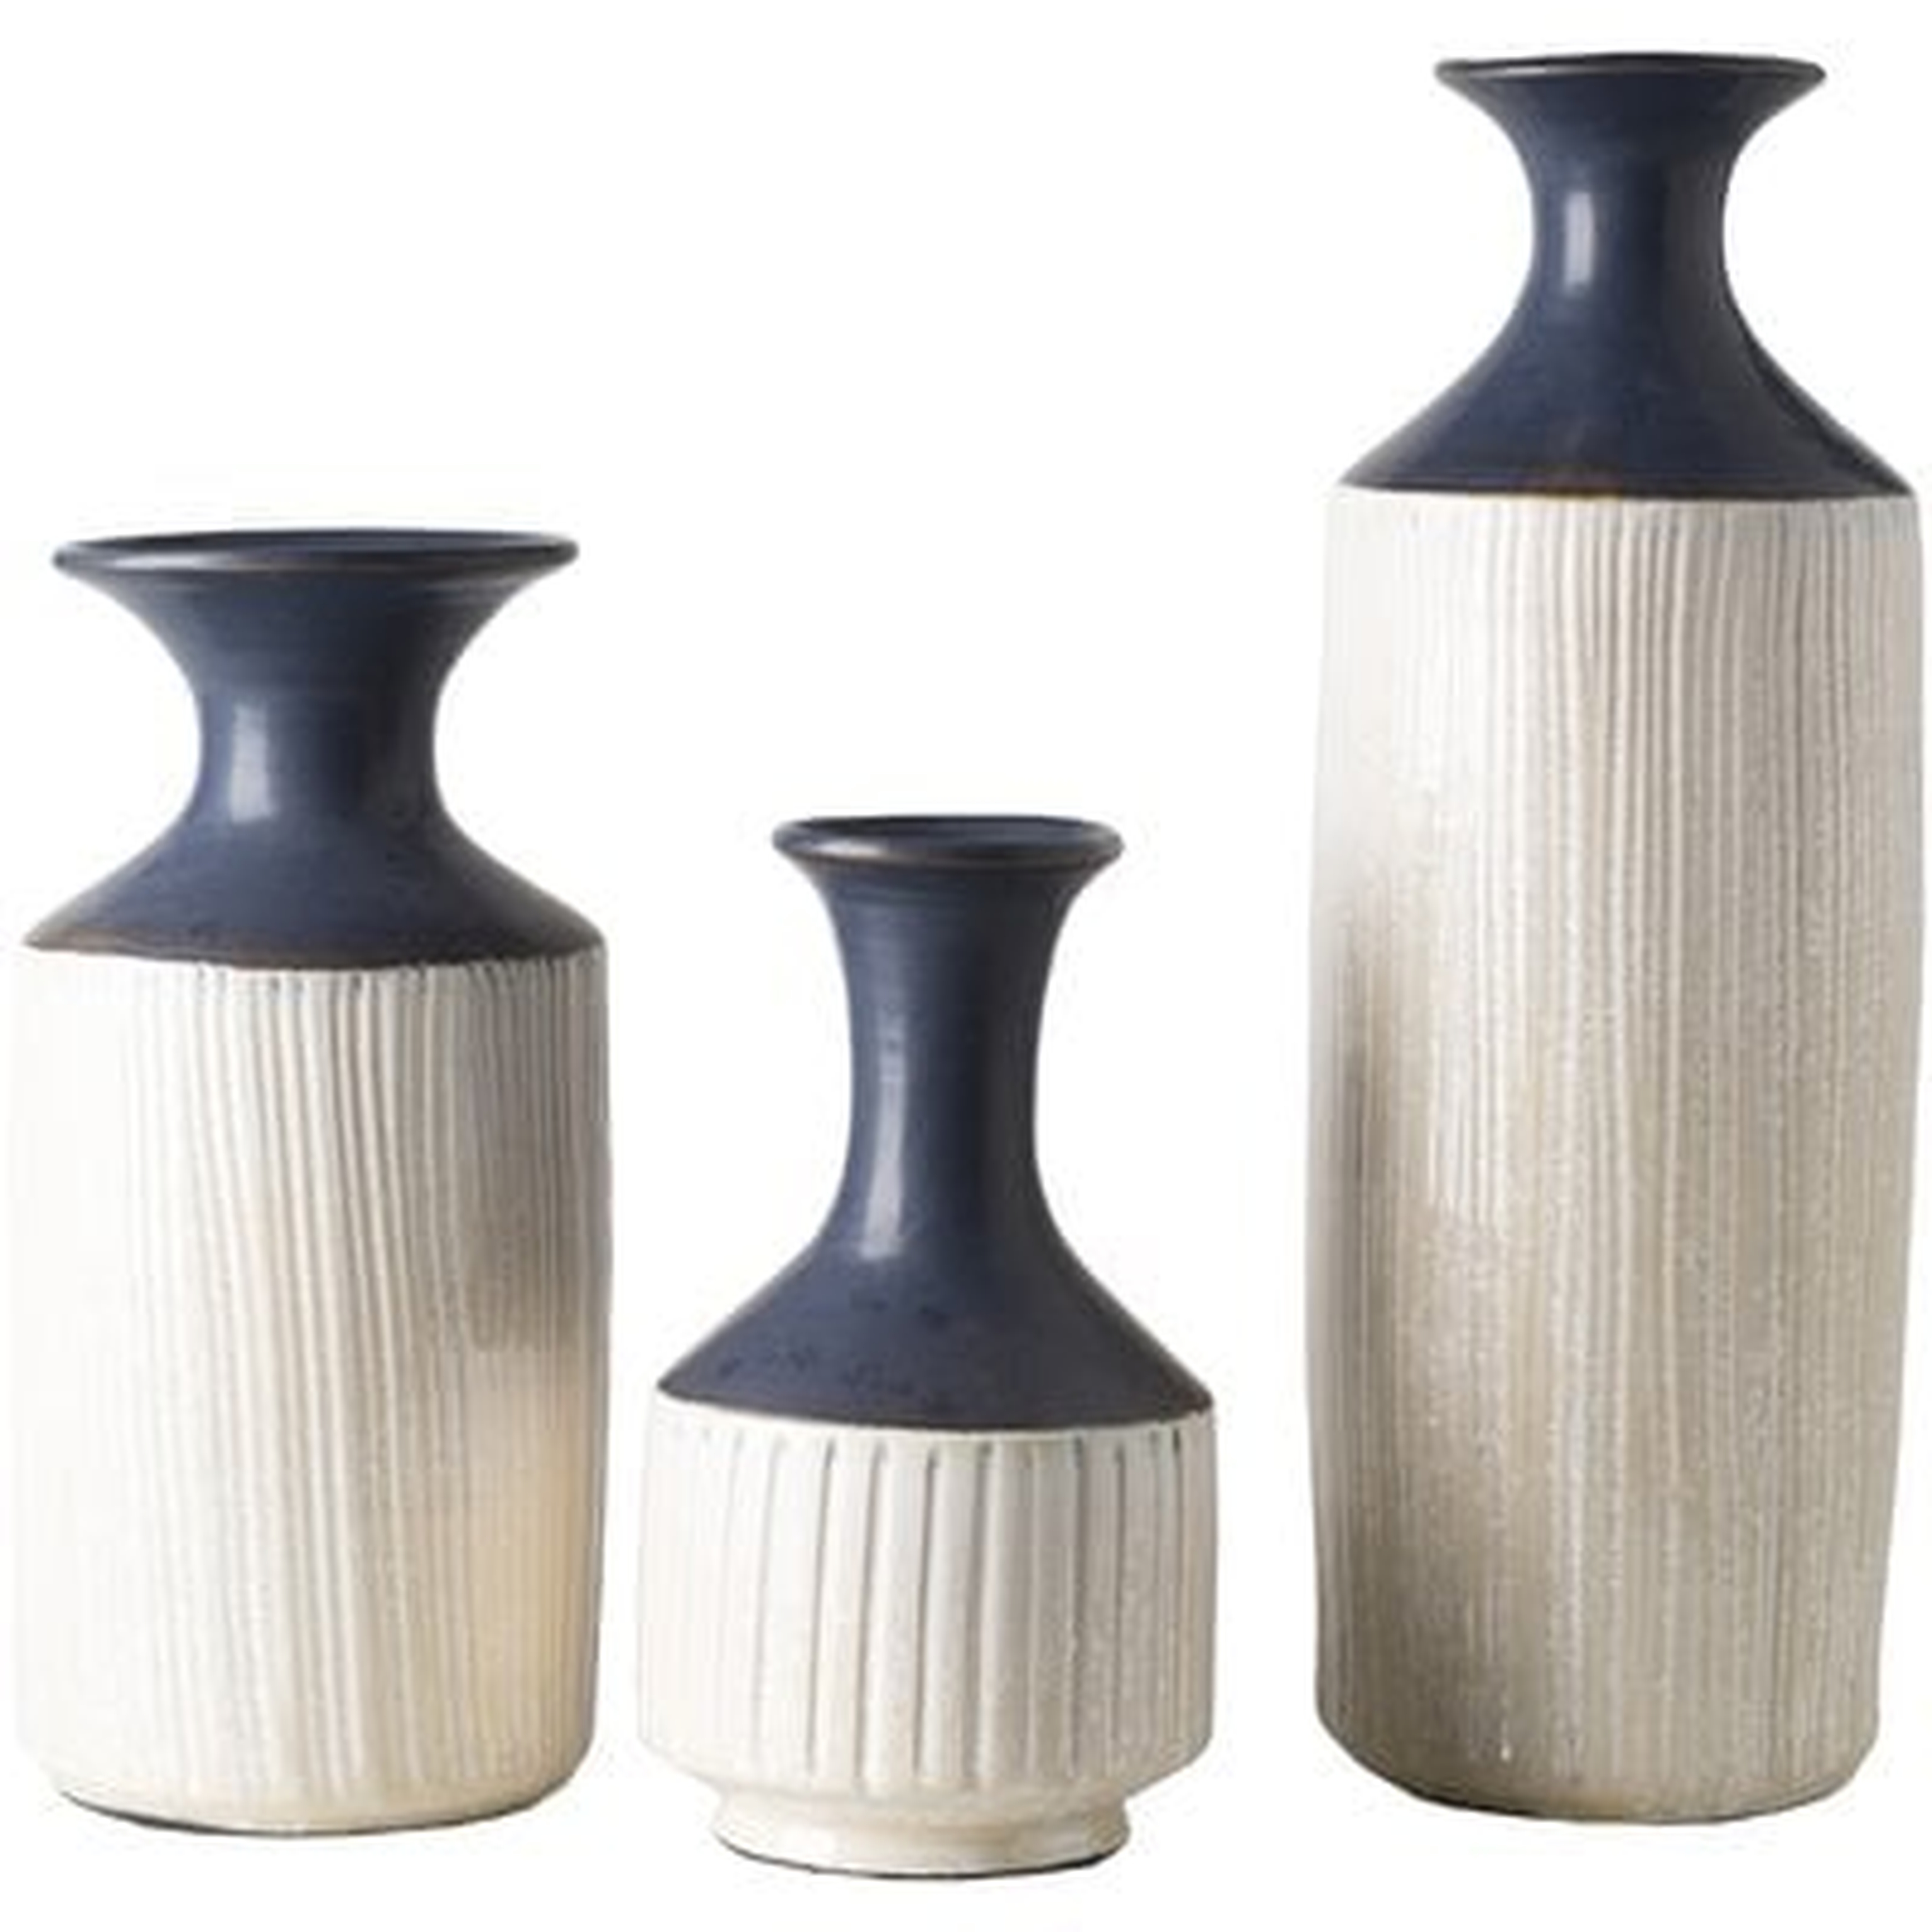 Navy Blue/White Ceramic 3 Piece Table Vase Set - Wayfair